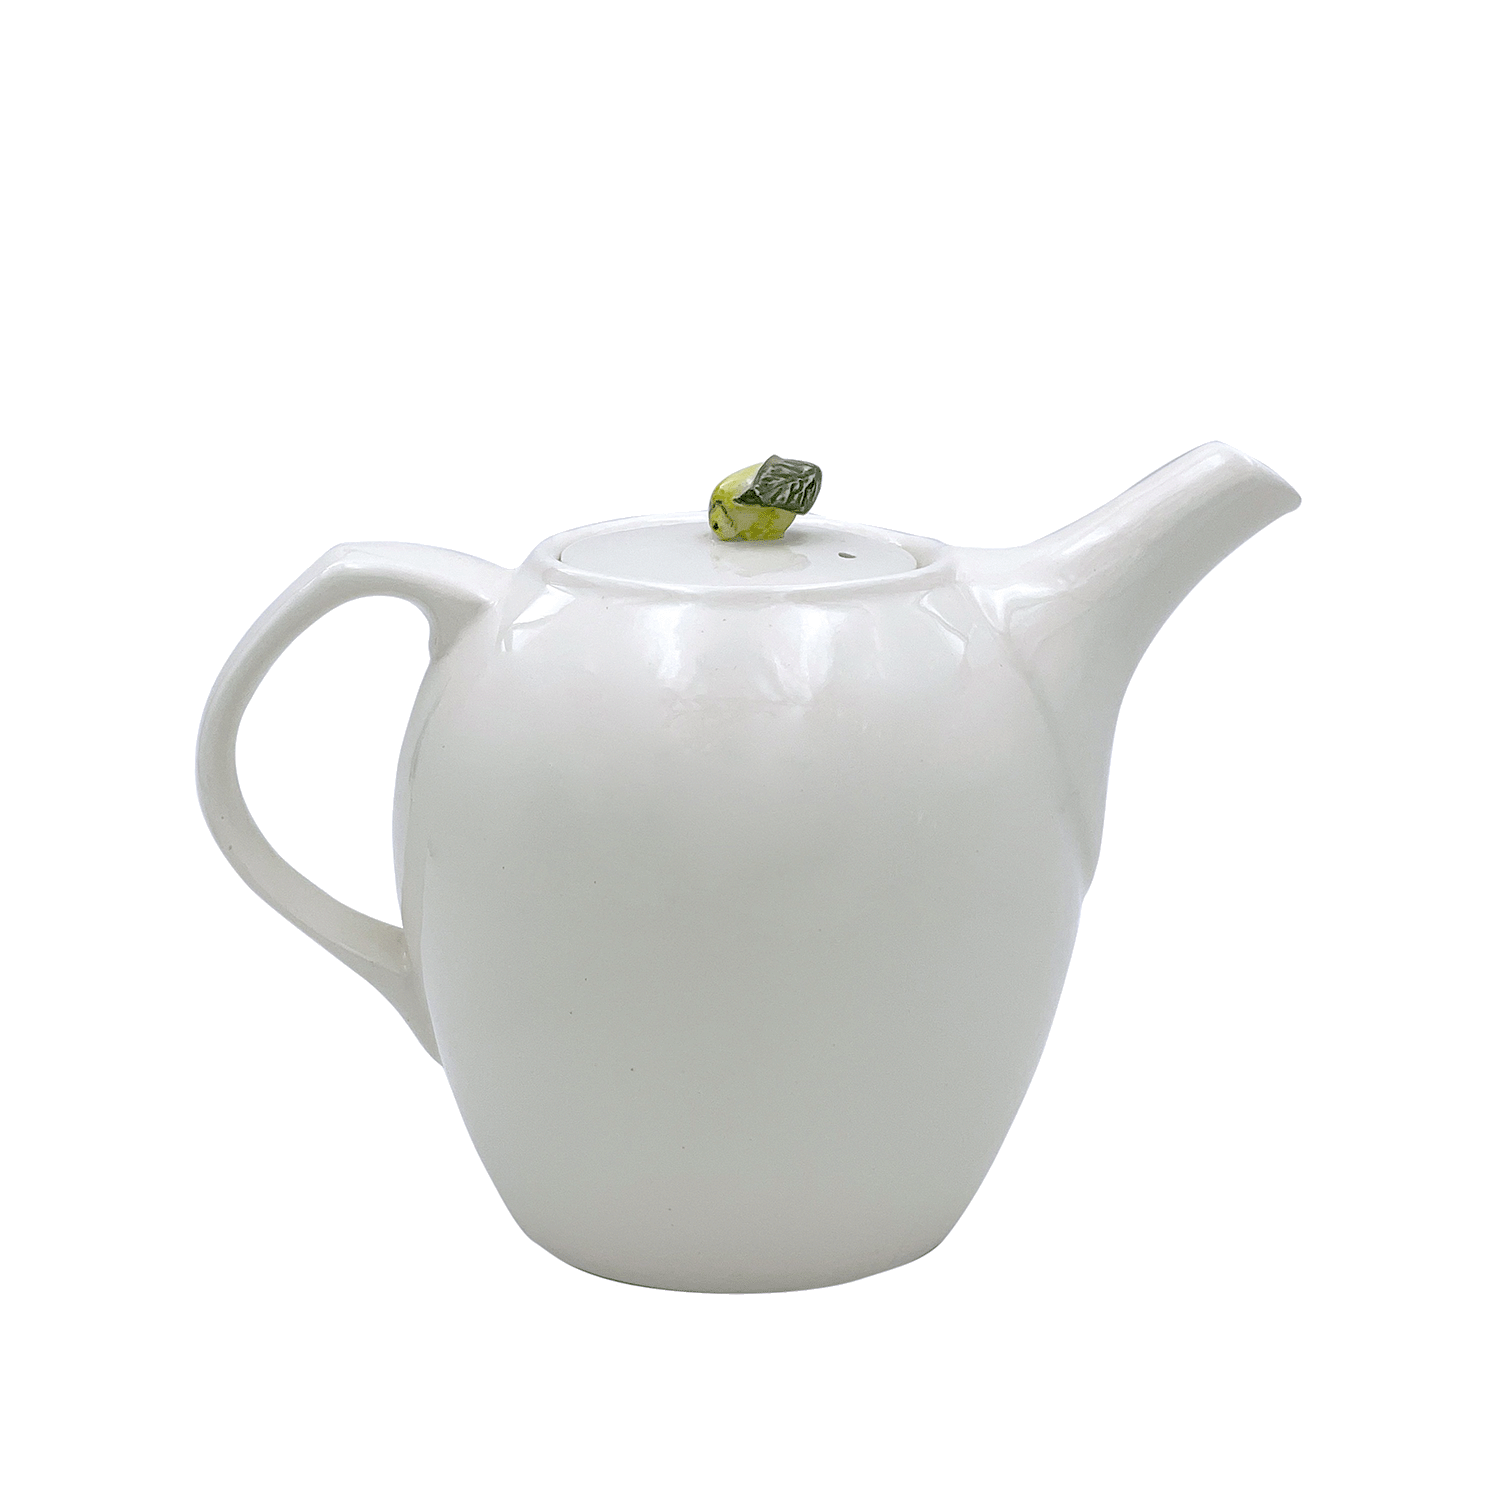 Cream Teapot with Lemon